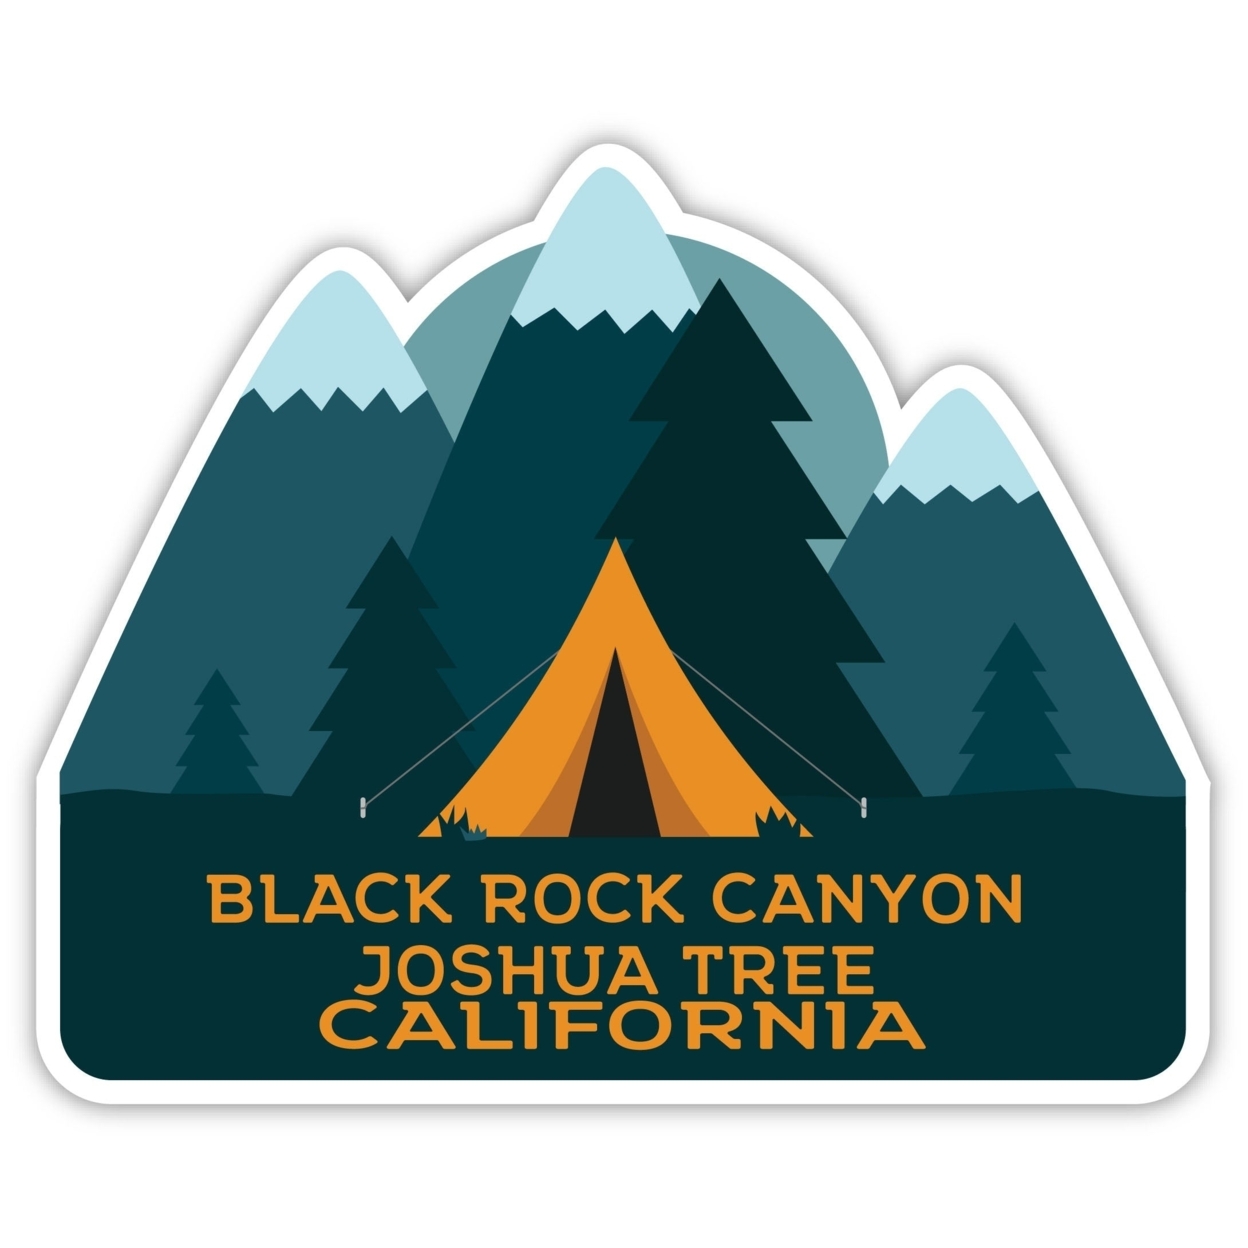 Black Rock Canyon Joshua Tree California Souvenir Decorative Stickers (Choose Theme And Size) - Single Unit, 8-Inch, Bear